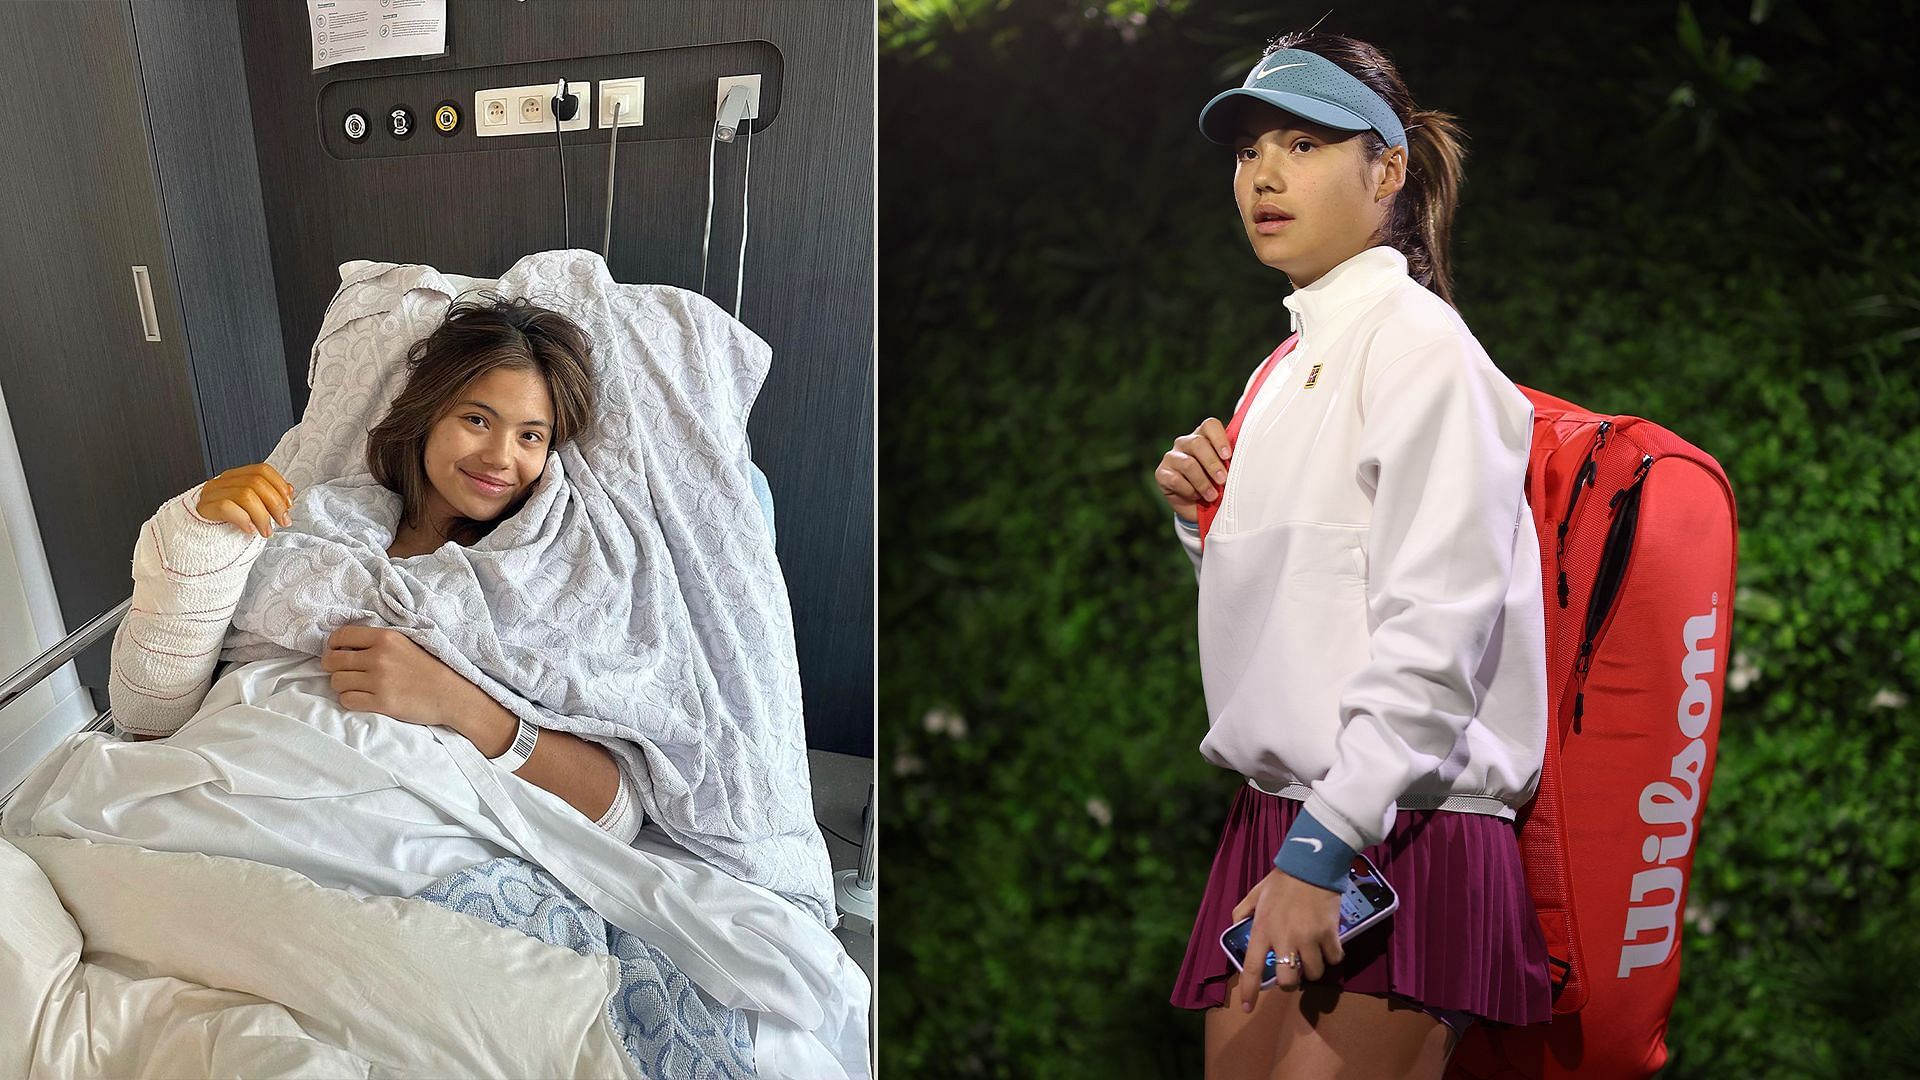 Tennis fans empathize with Emma Raducanu after surprise surgery news